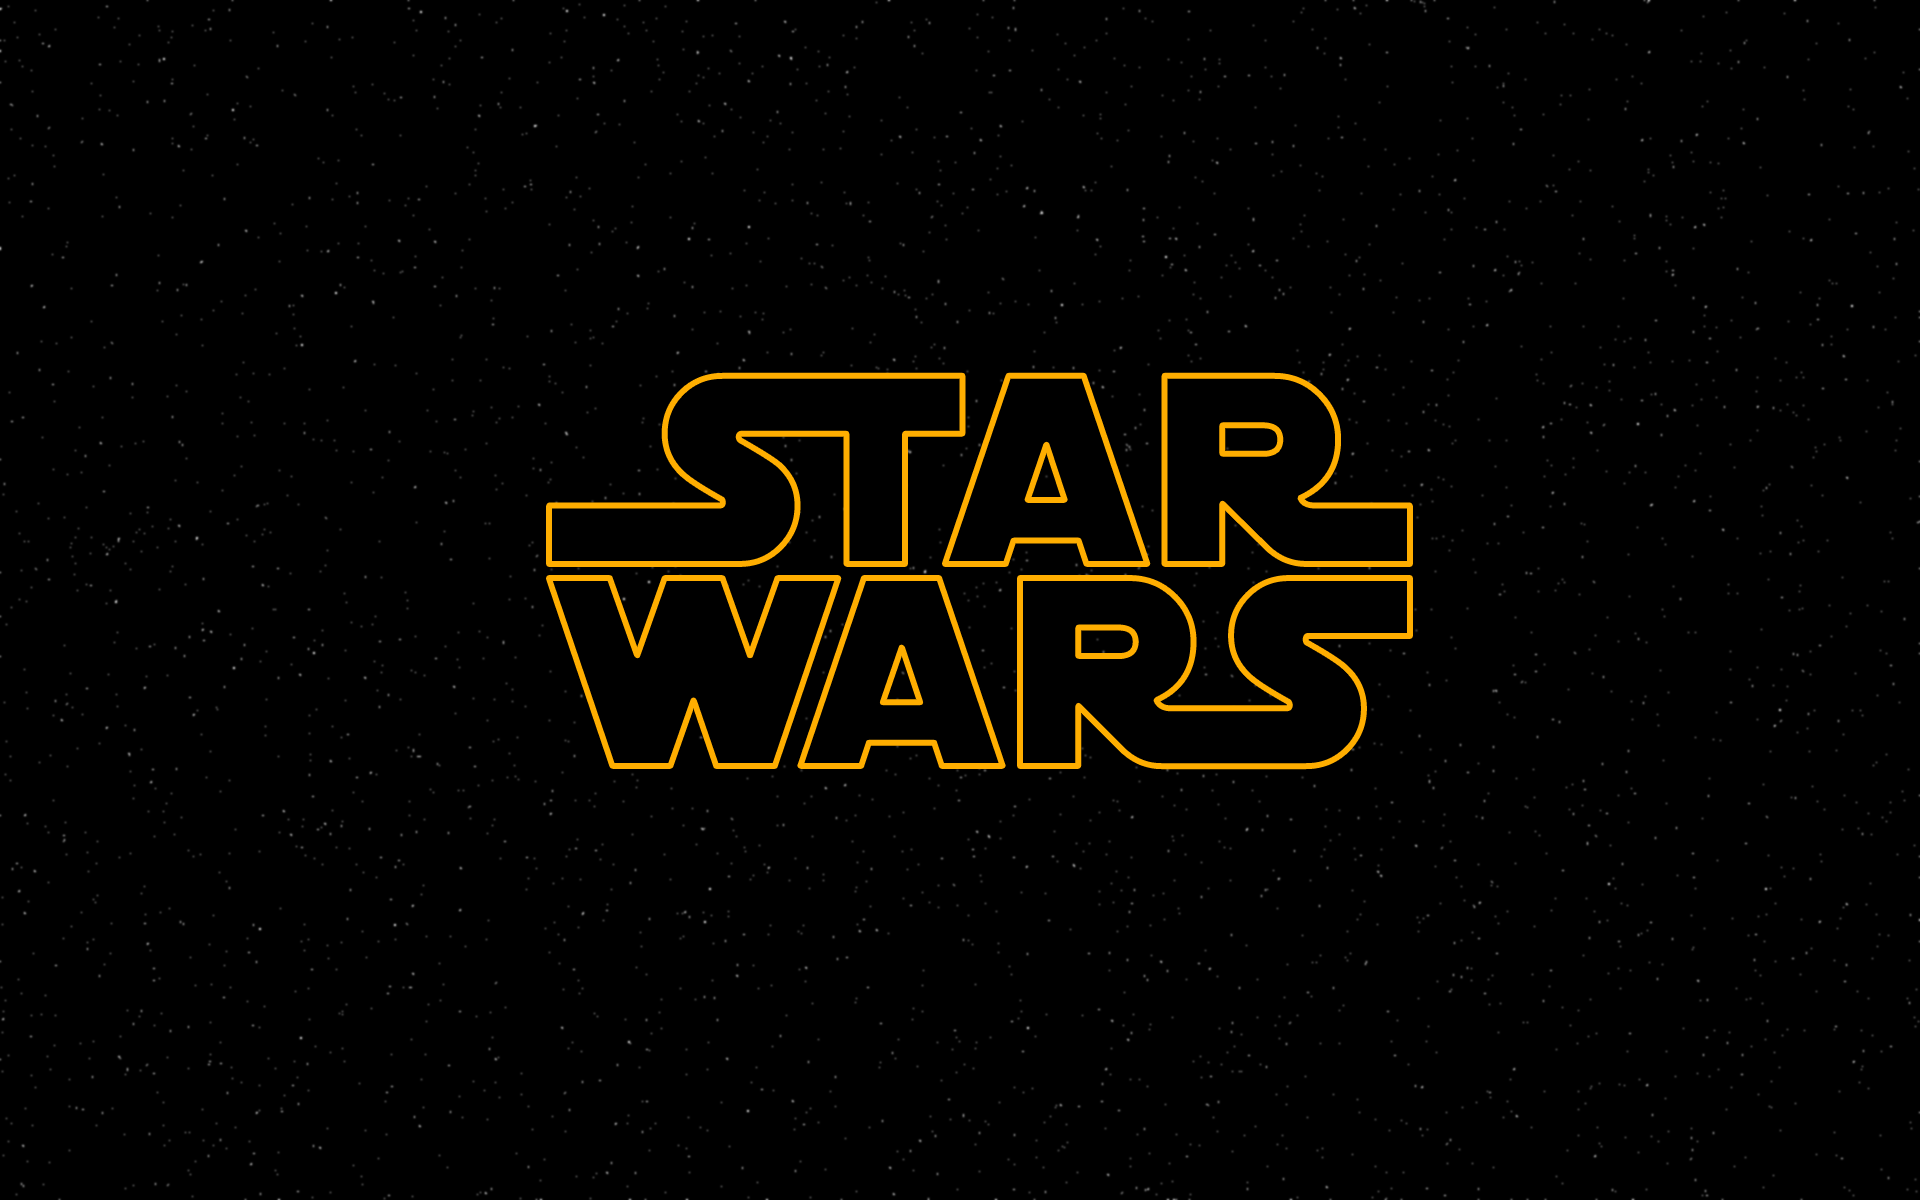 Star Wars Logo Wallpaper 28512 1920x1200 px